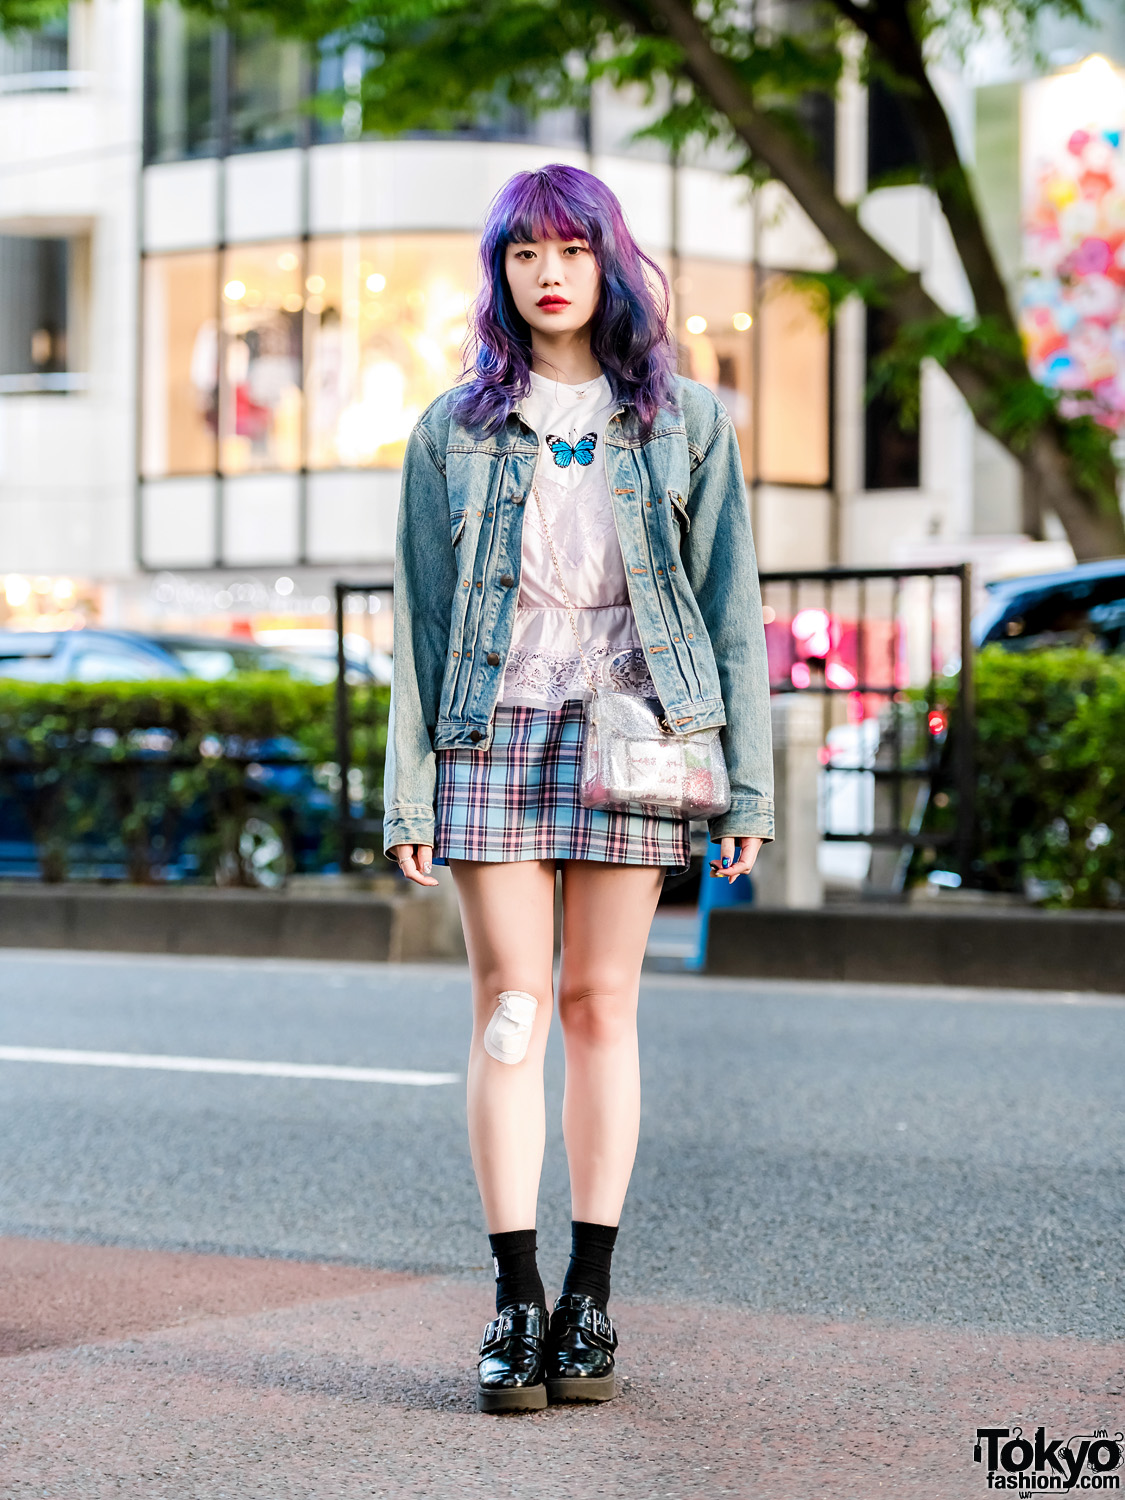 Elleanor in Harajuku w/ Kinji Denim Jacket, Lace Camisole, WC Plaid Skirt & Heels